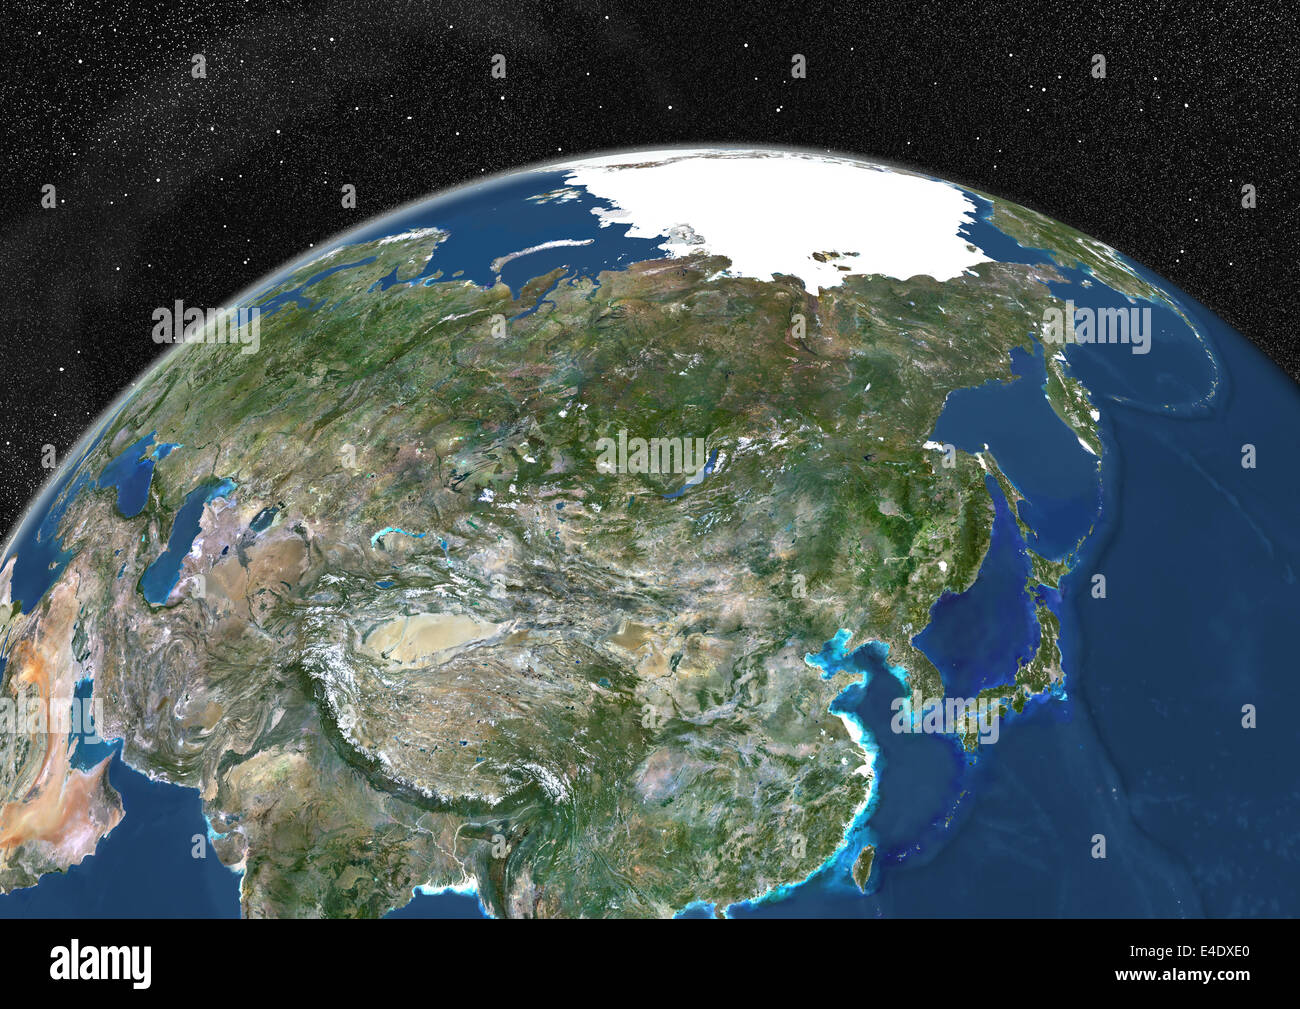 Kugel-Asien, Echtfarben-Satellitenbild zeigt. Echtfarben-Satellitenbild der Erde zeigen, Asien und dem Nordpol. Dies Stockfoto